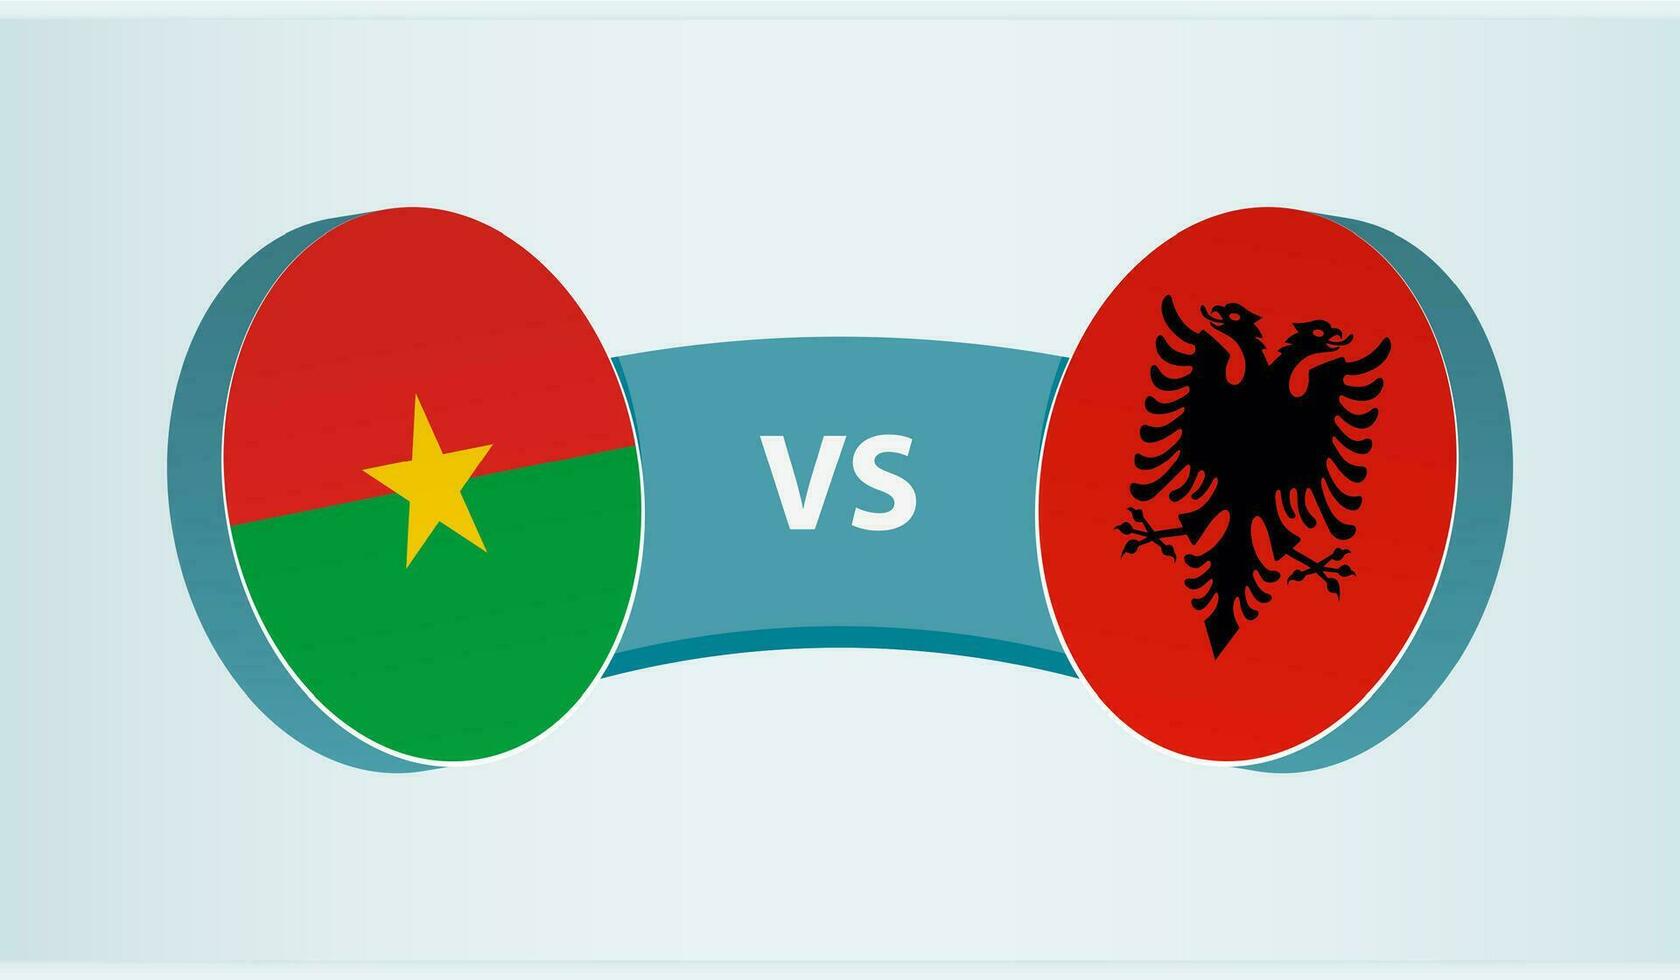 Burkina Faso versus Albania, team sports competition concept. vector